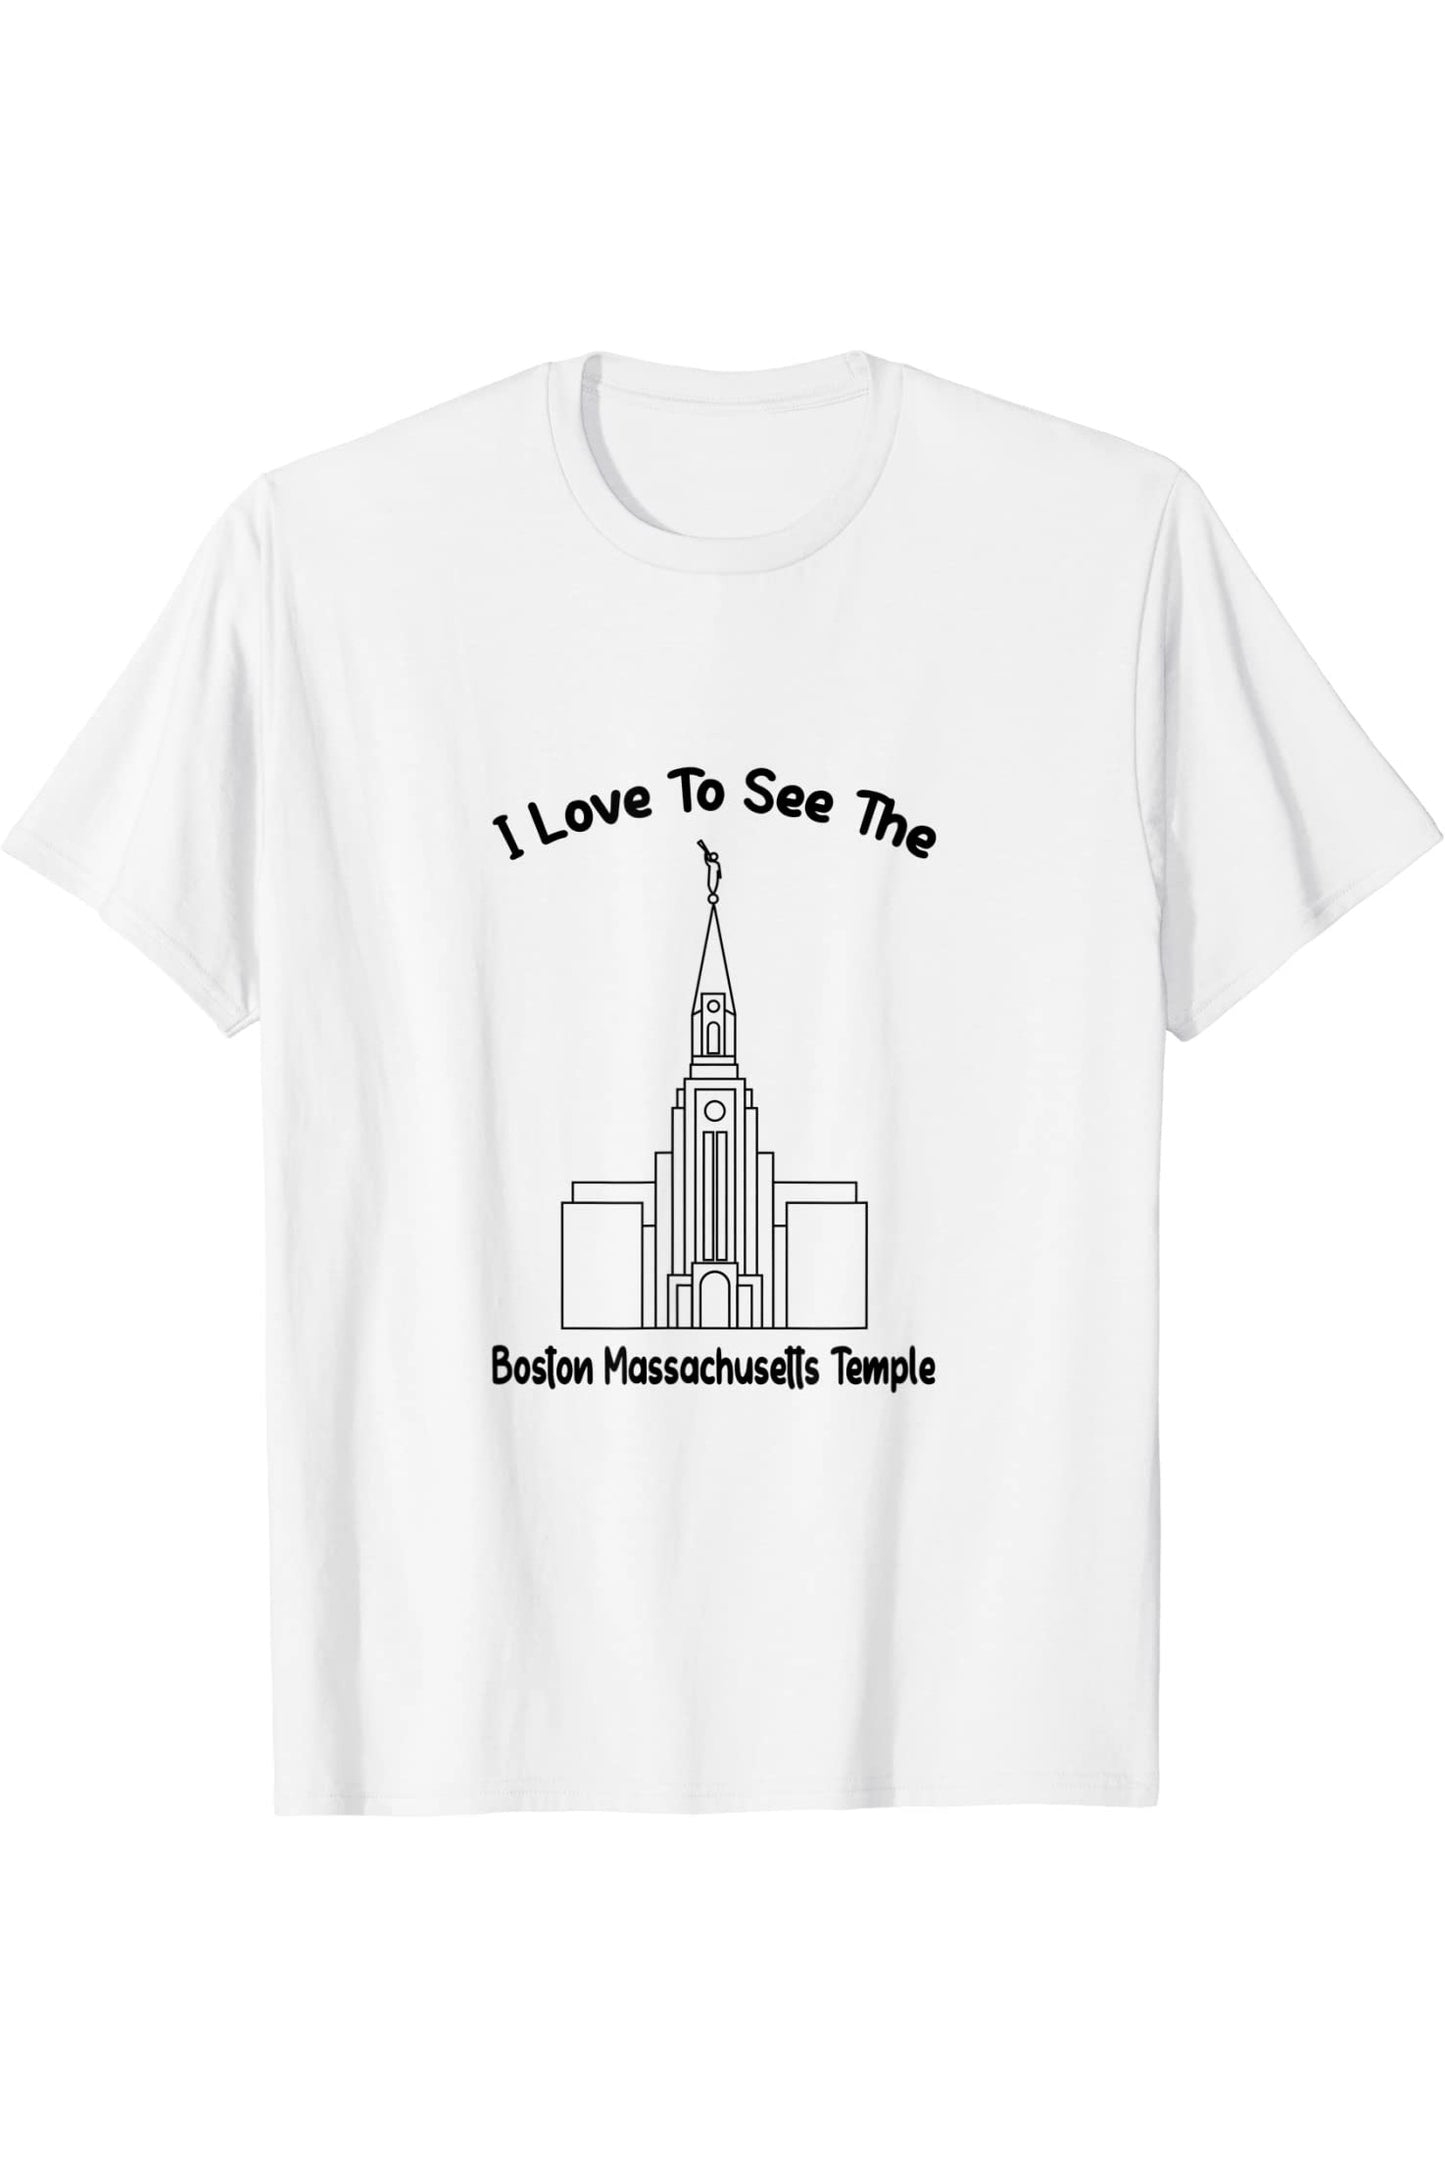 Boston Massachusetts Temple T-Shirt - Primary Style (English) US